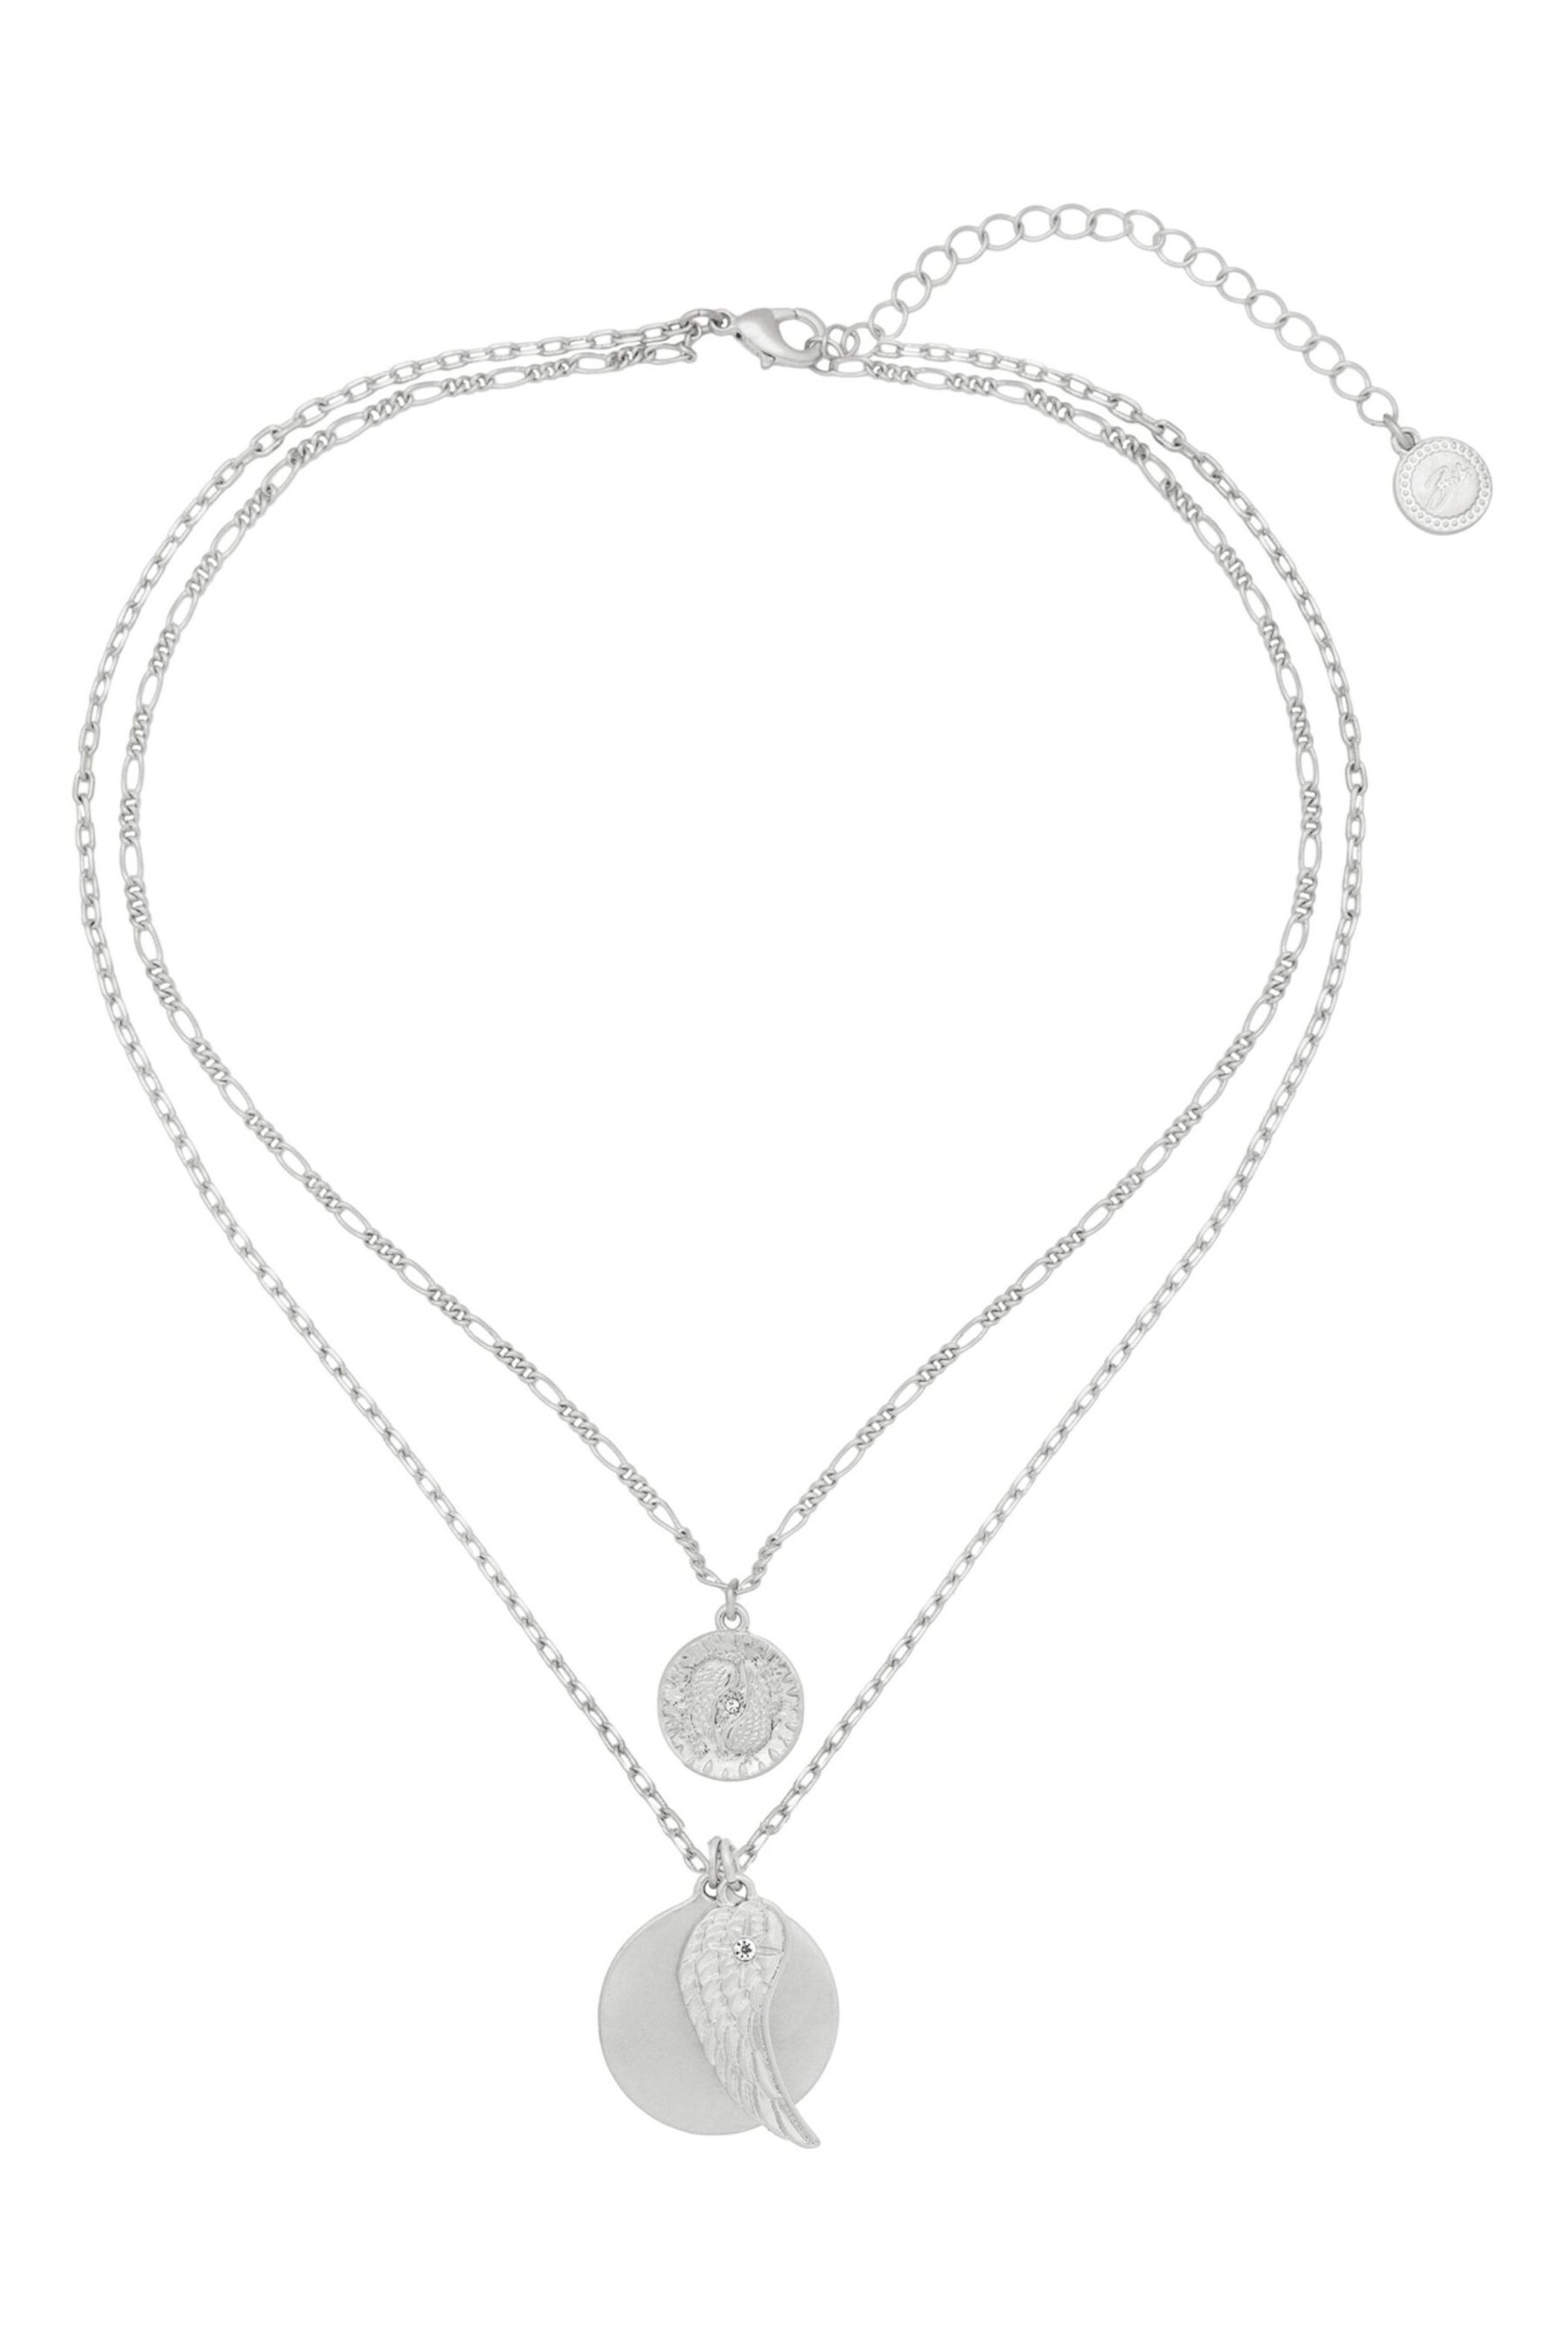 Bibi Bijoux Silver Tone Serenity Layered Charm Necklace - Image 1 of 4